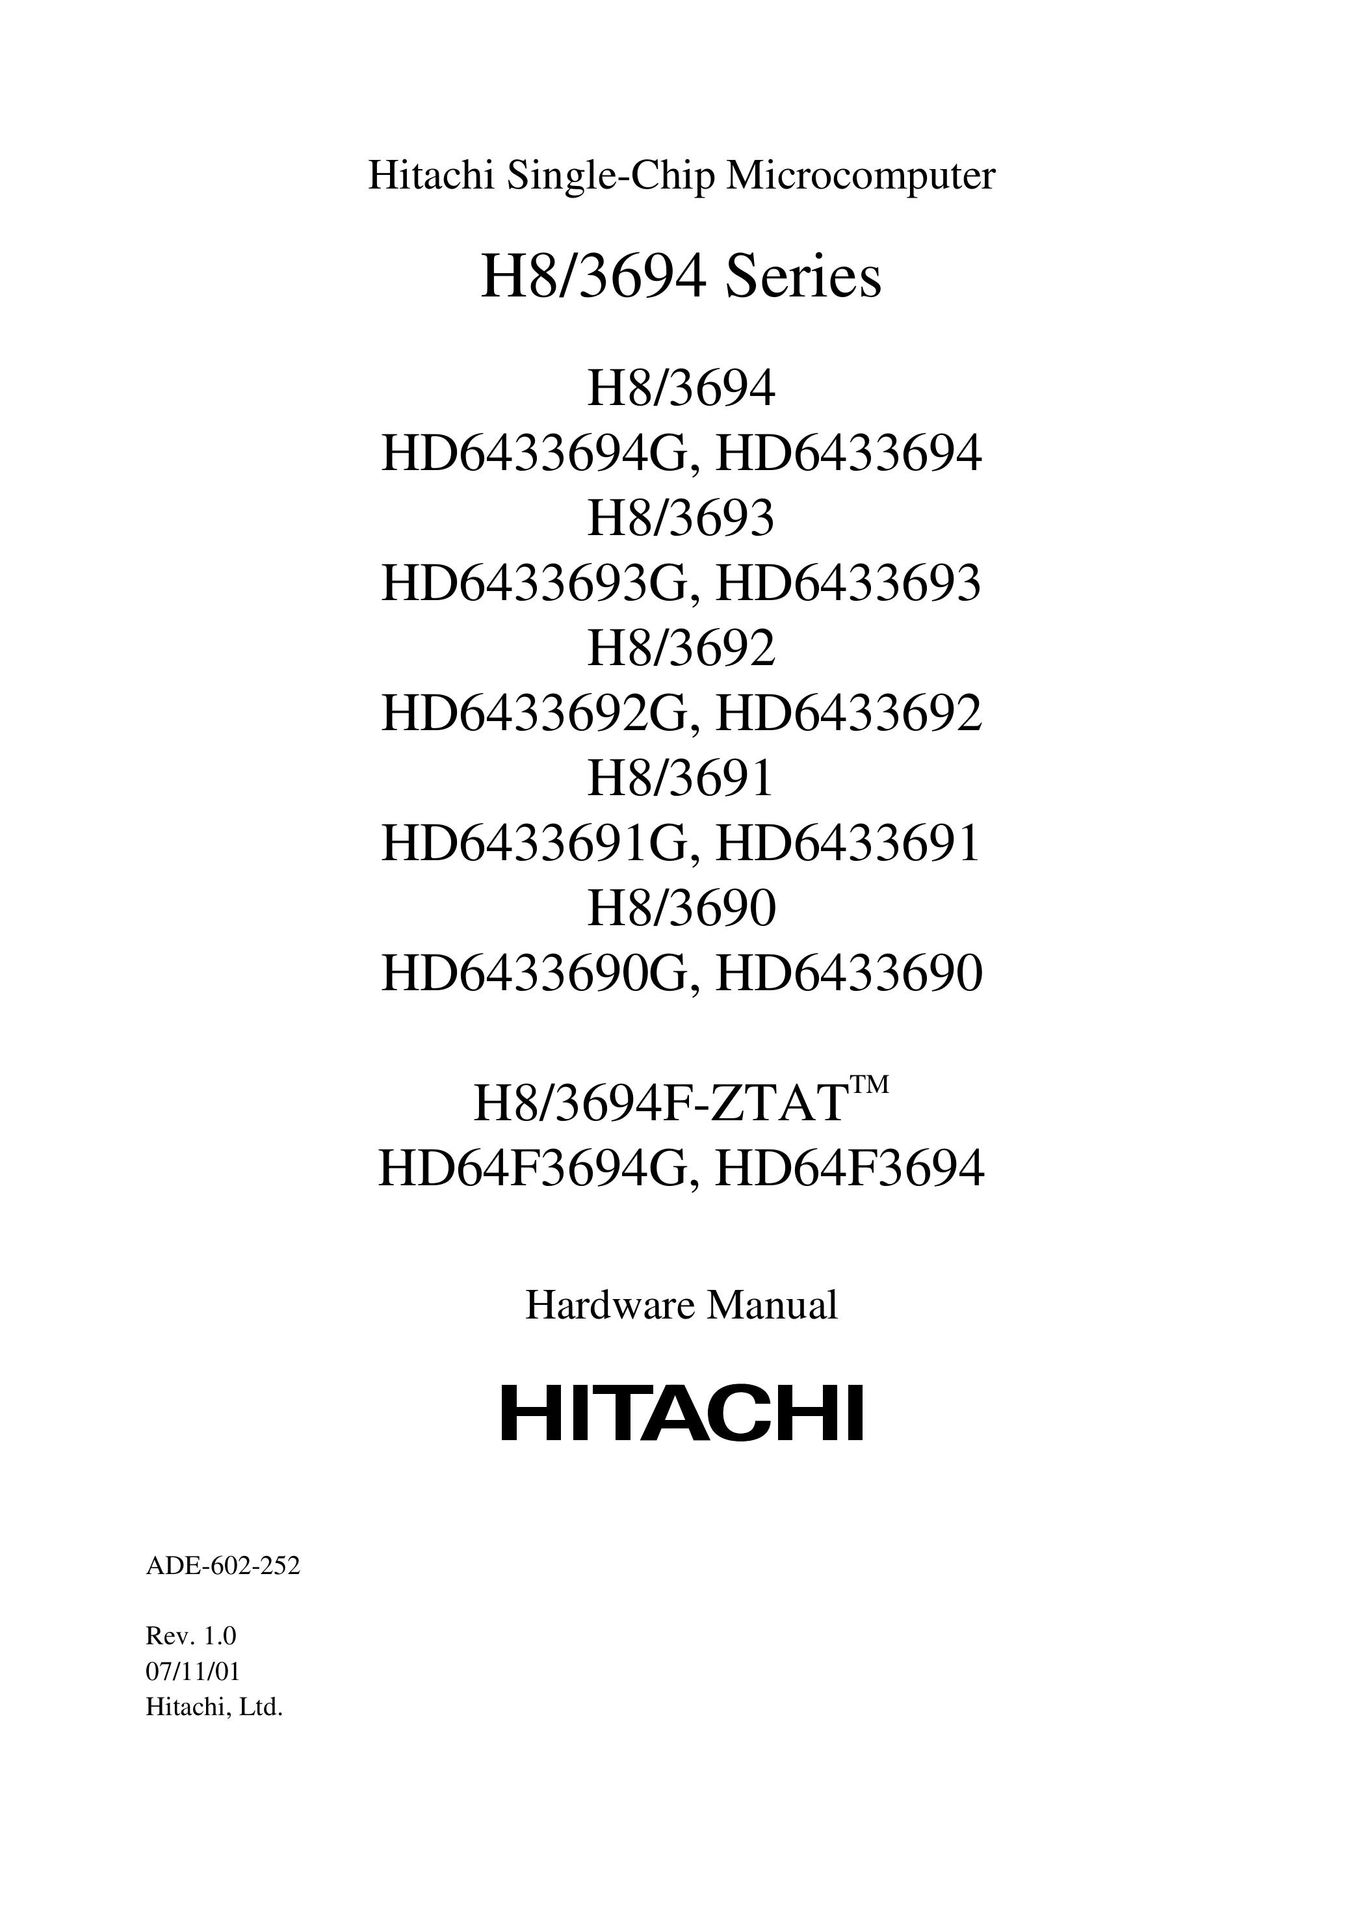 Hitachi HD6433690 TV Mount User Manual